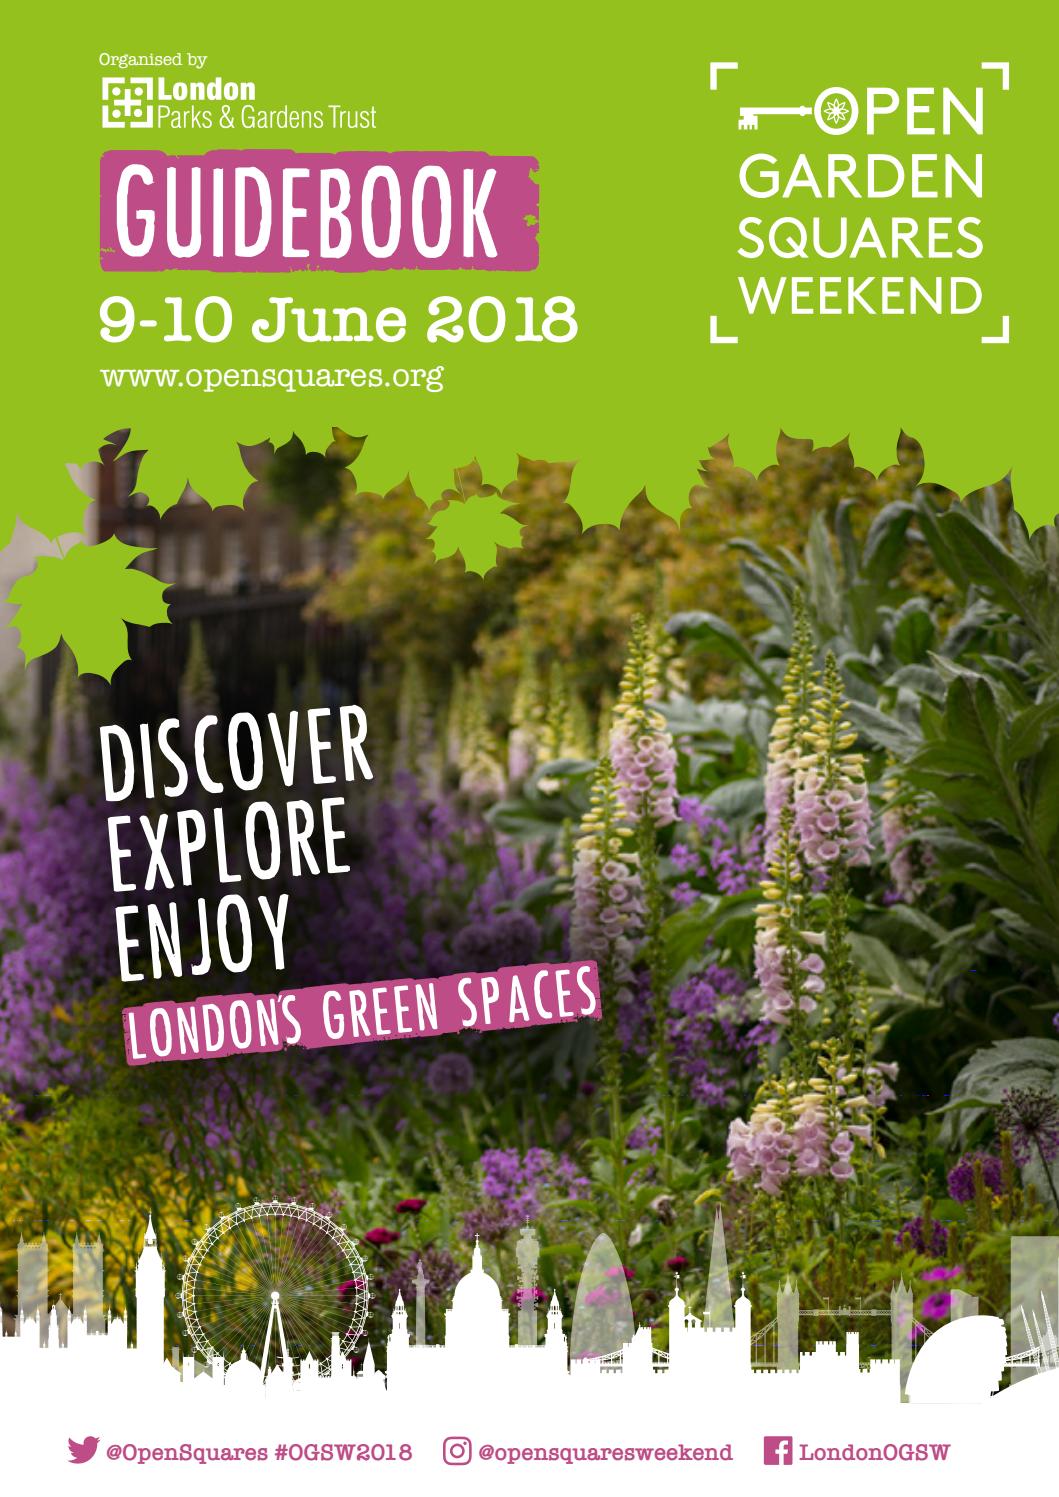 Permakultur Garten Anleitung Schön Open Garden Squares Weekend Guidebook 2018 by London Parks